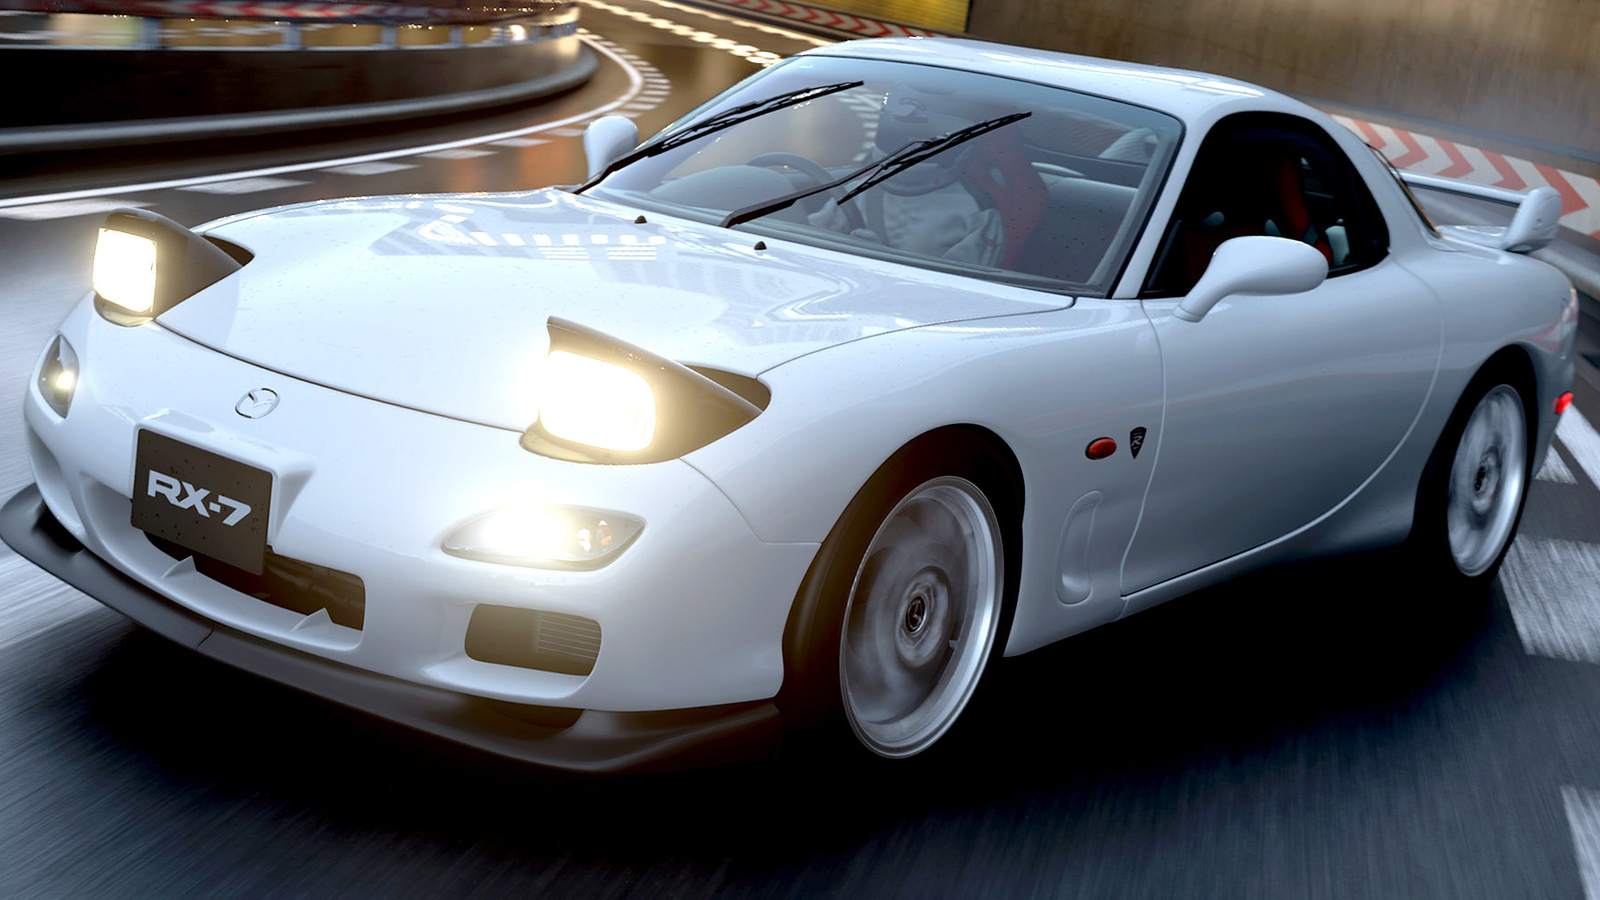 Gran Turismo 7 PS5 Gameplay Looks STUNNING